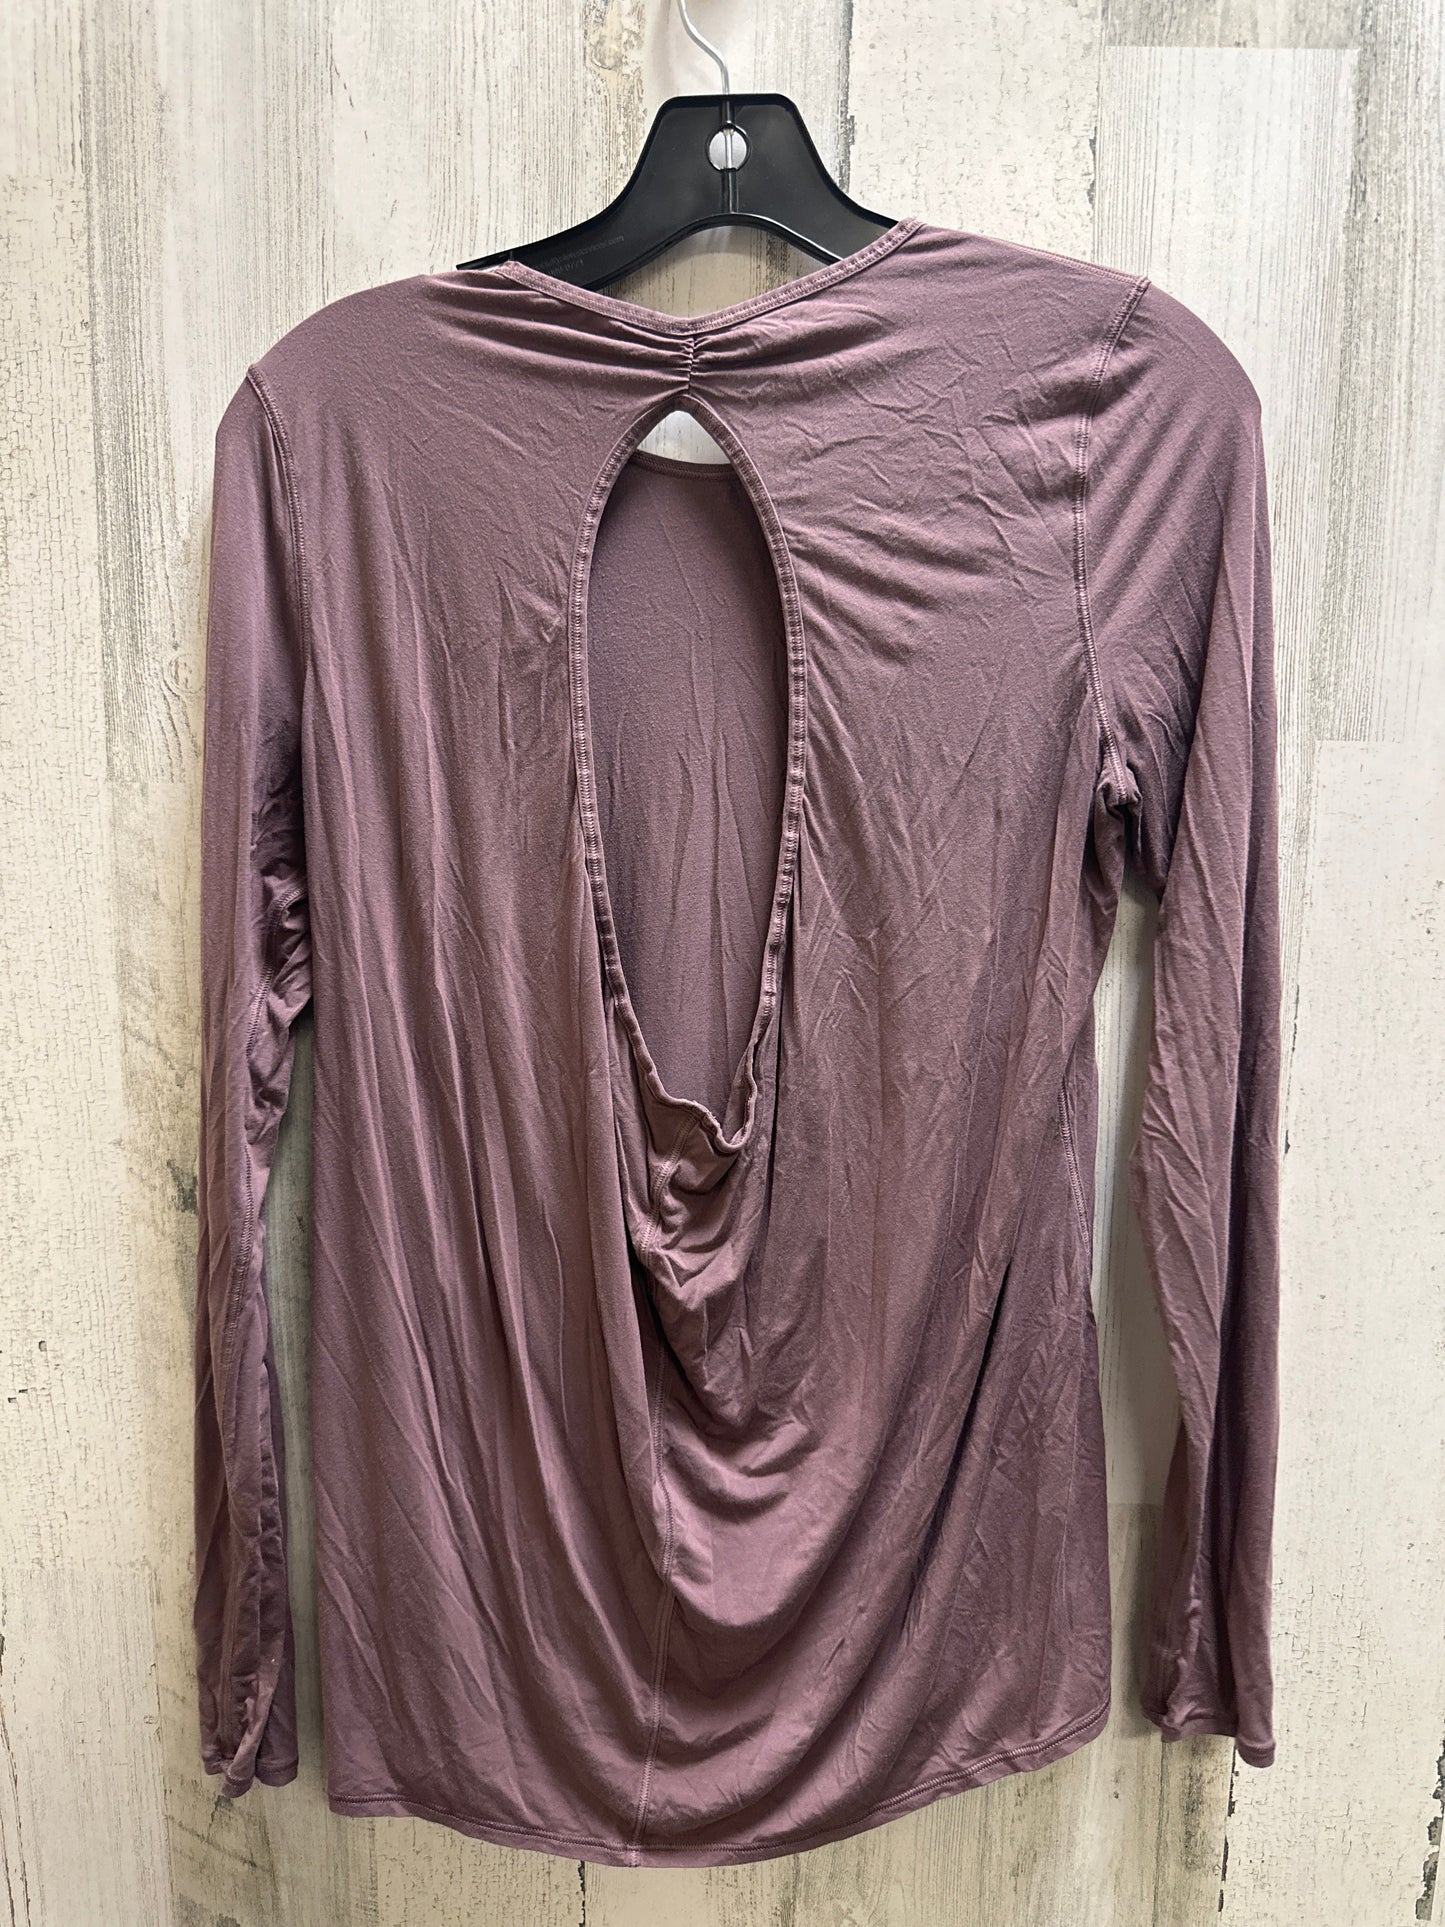 Purple Top Long Sleeve Lululemon, Size S